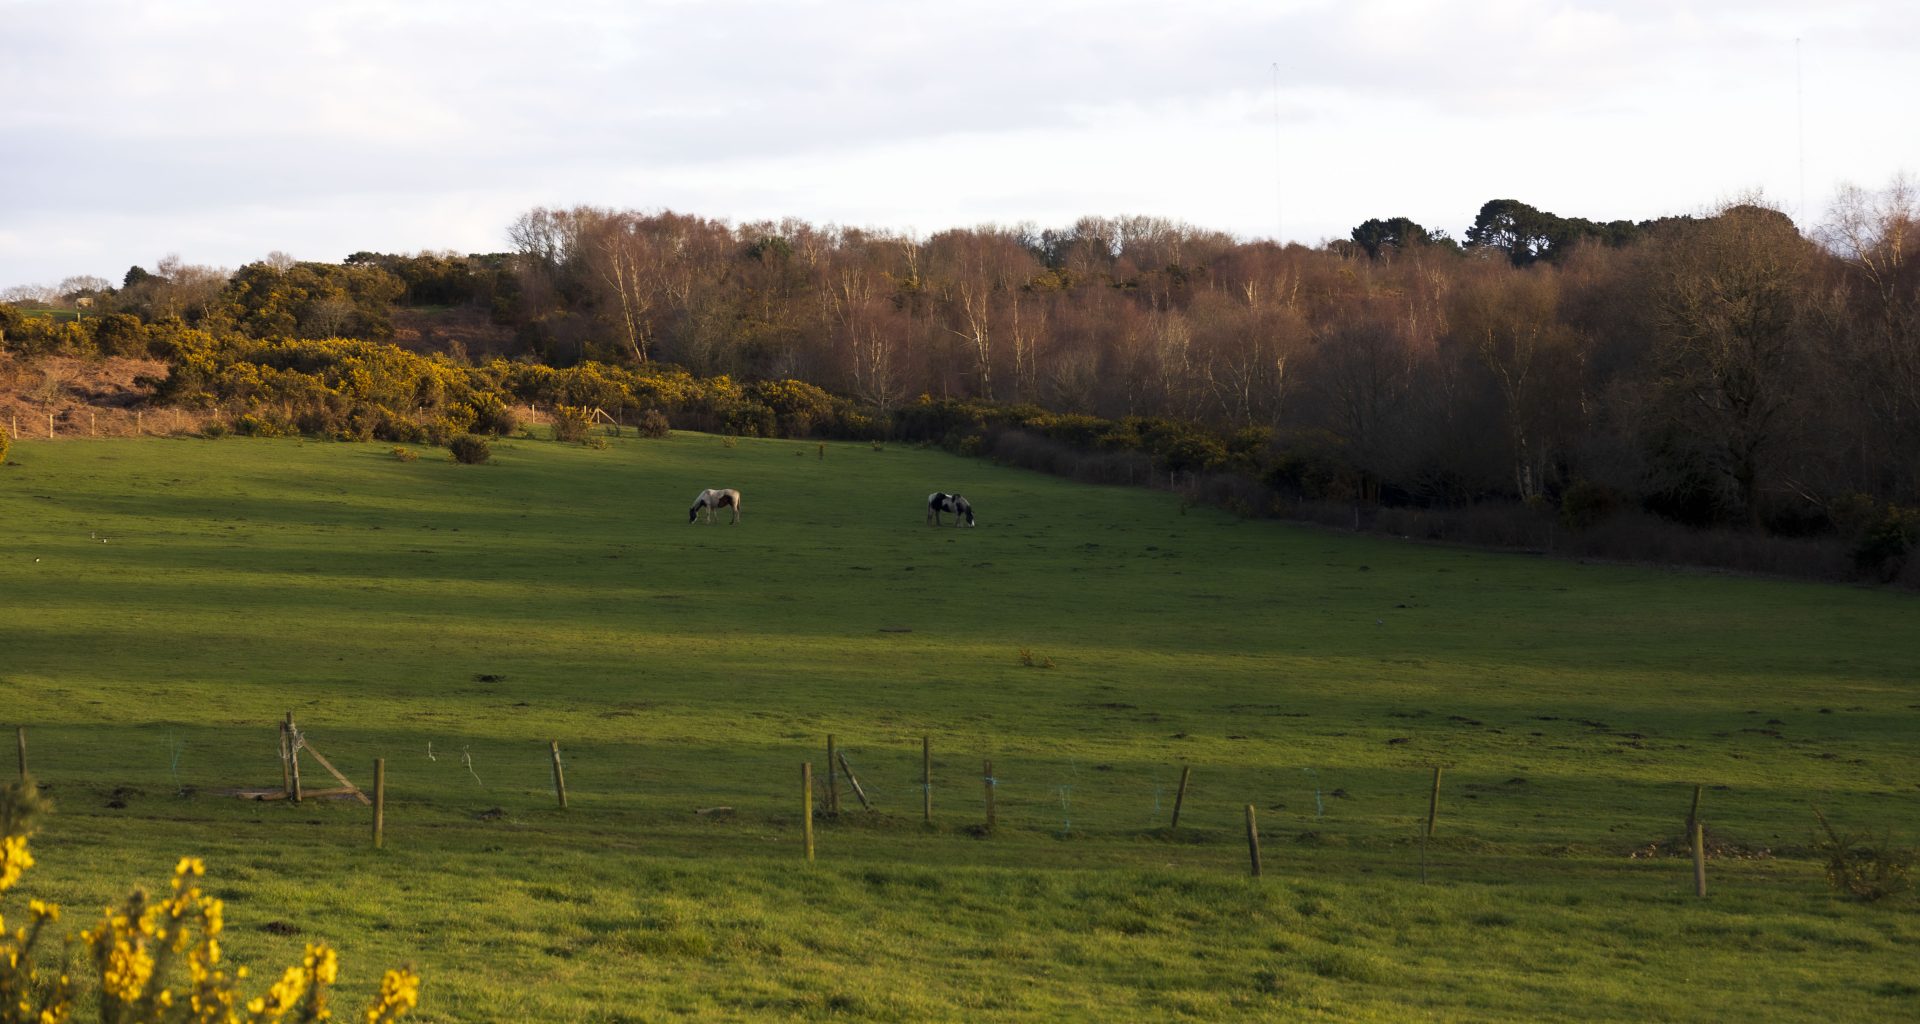 A view of Highmoor Farm